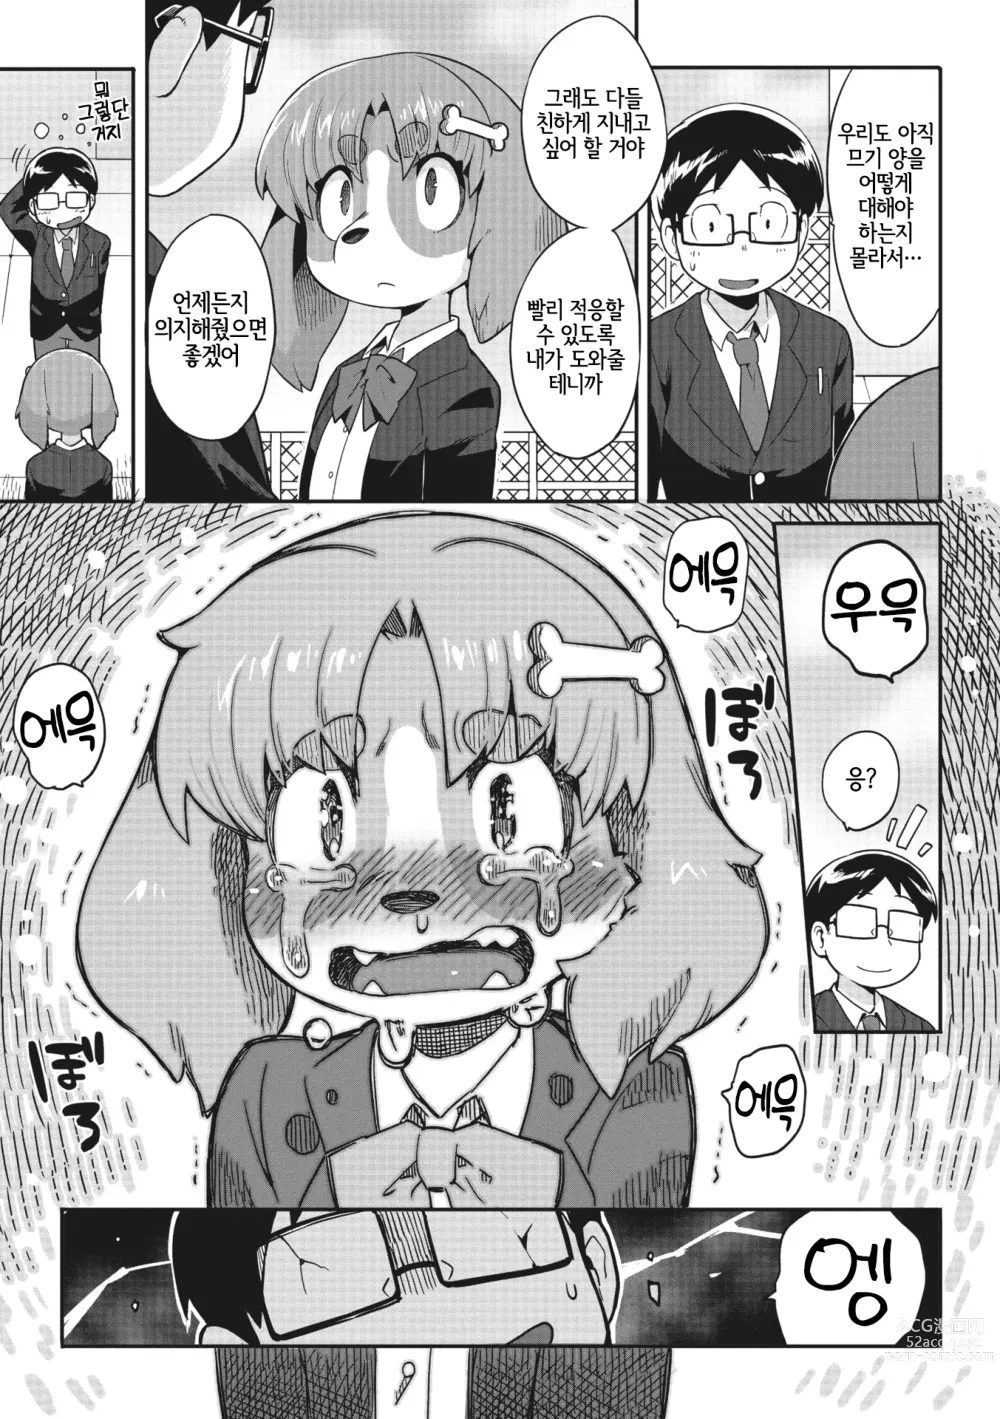 Page 5 of manga  주인님!!